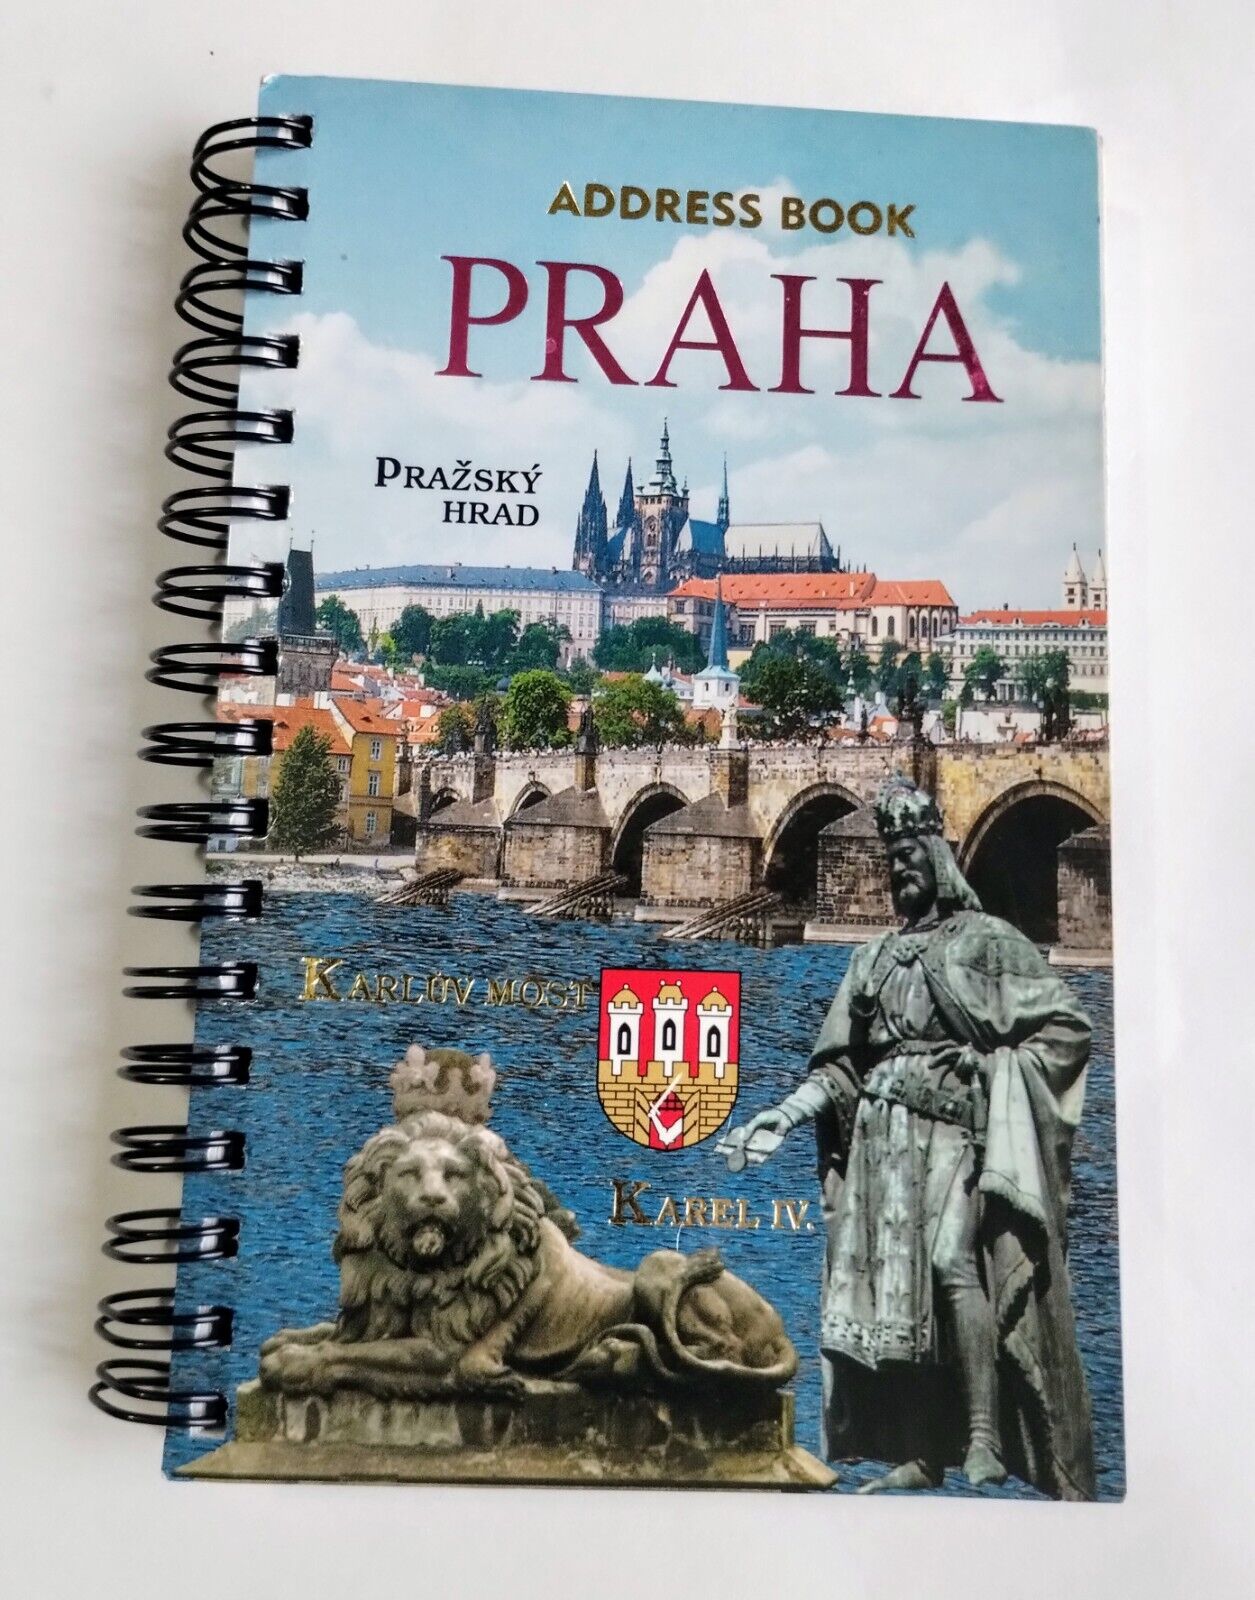 Praha (Prague) Postcard Address Book 4